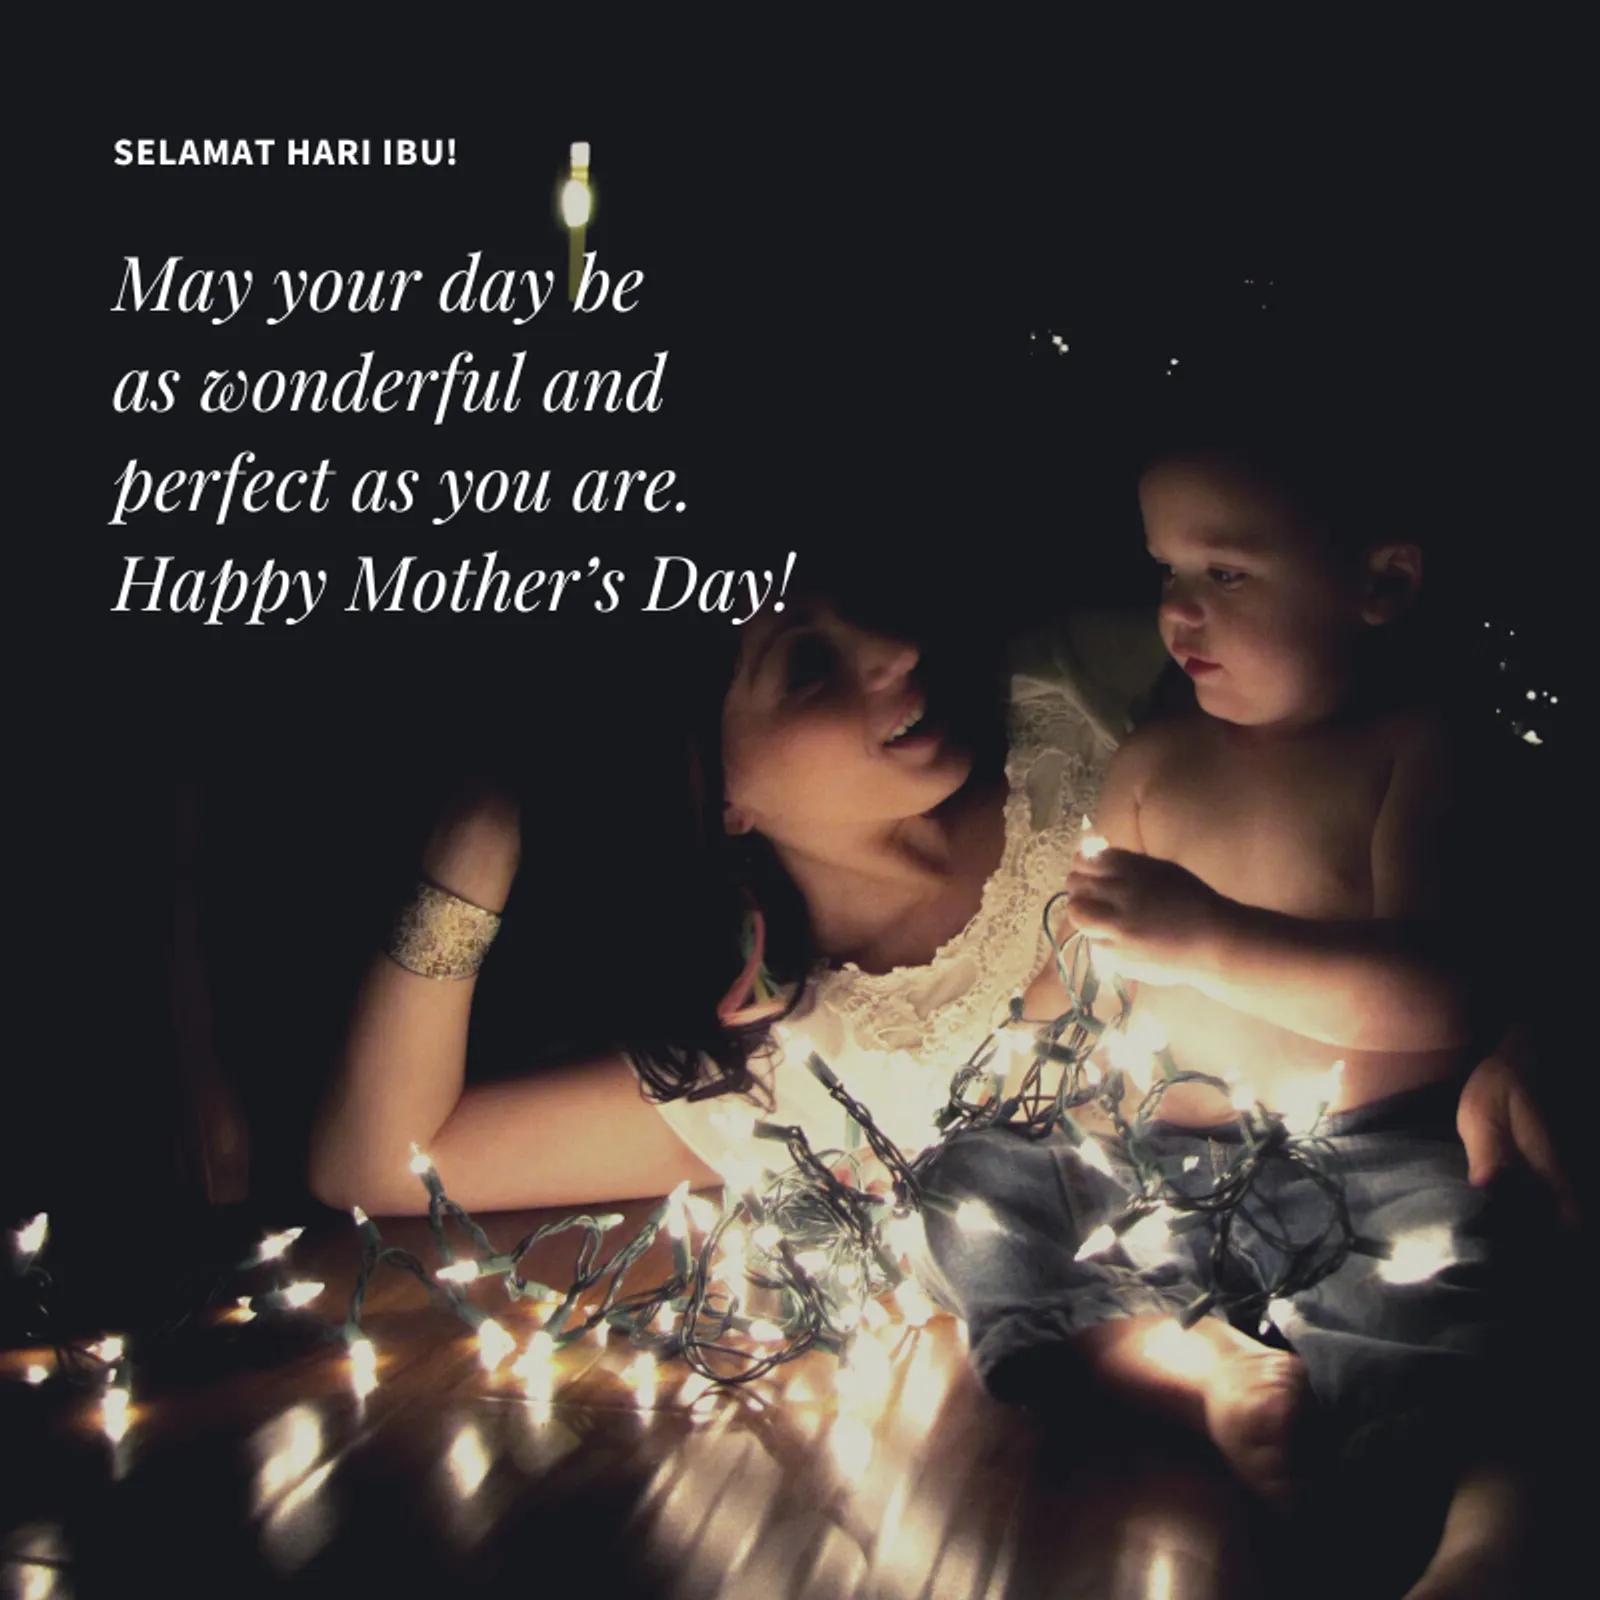 15 Contoh Kartu Ucapan Selamat Hari Ibu yang Menyentuh Hati